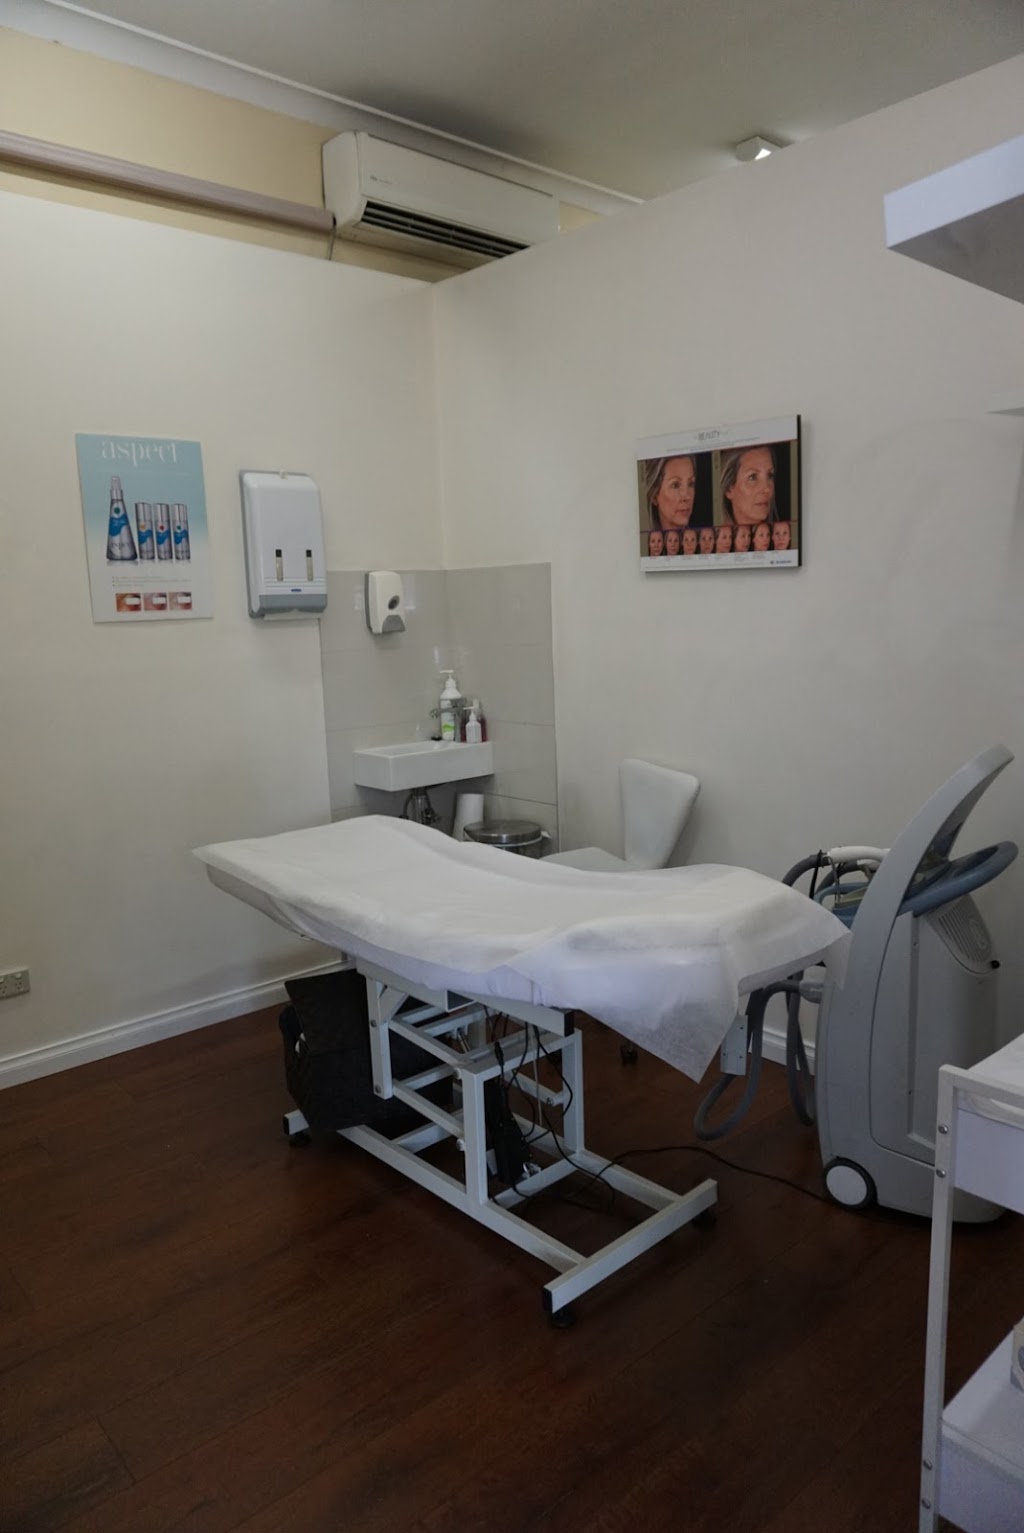 Bare Body Laser & Skin Clinic | hair care | 245 Melville Rd, Brunswick West VIC 3055, Australia | 0393863636 OR +61 3 9386 3636